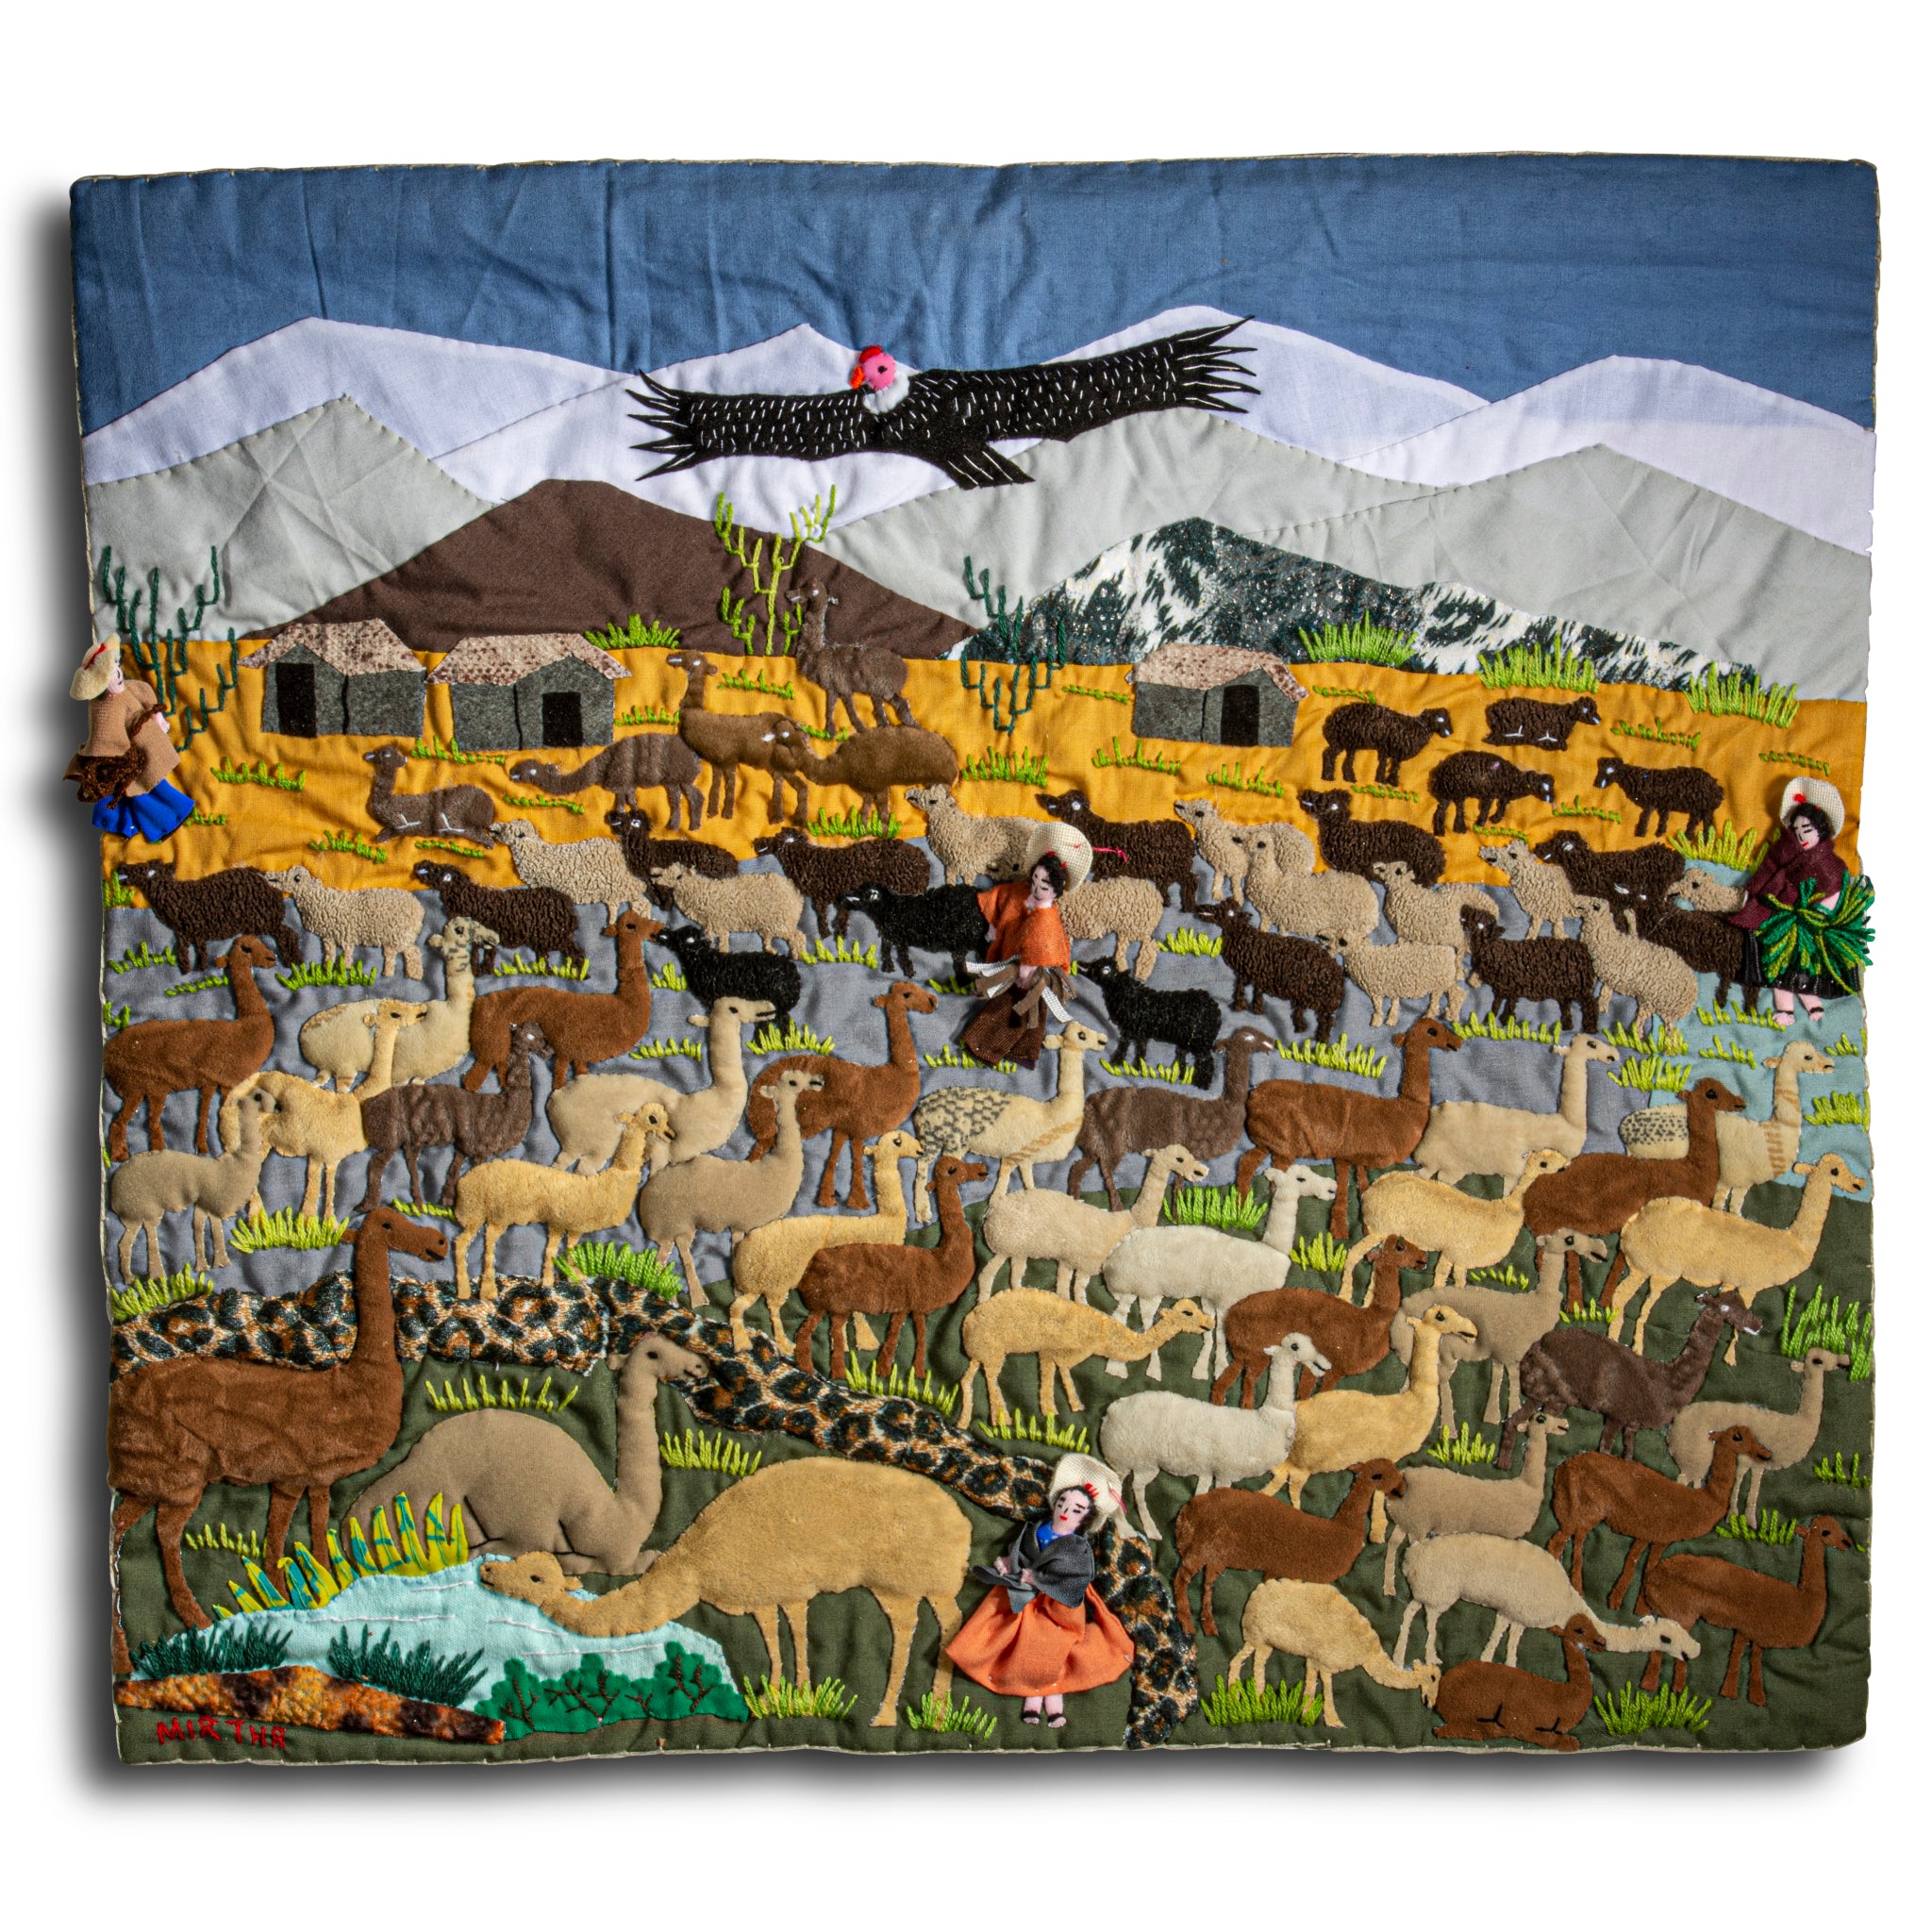 Llamas & Alpacas - Medium 3-D Arpillera Art Quilt